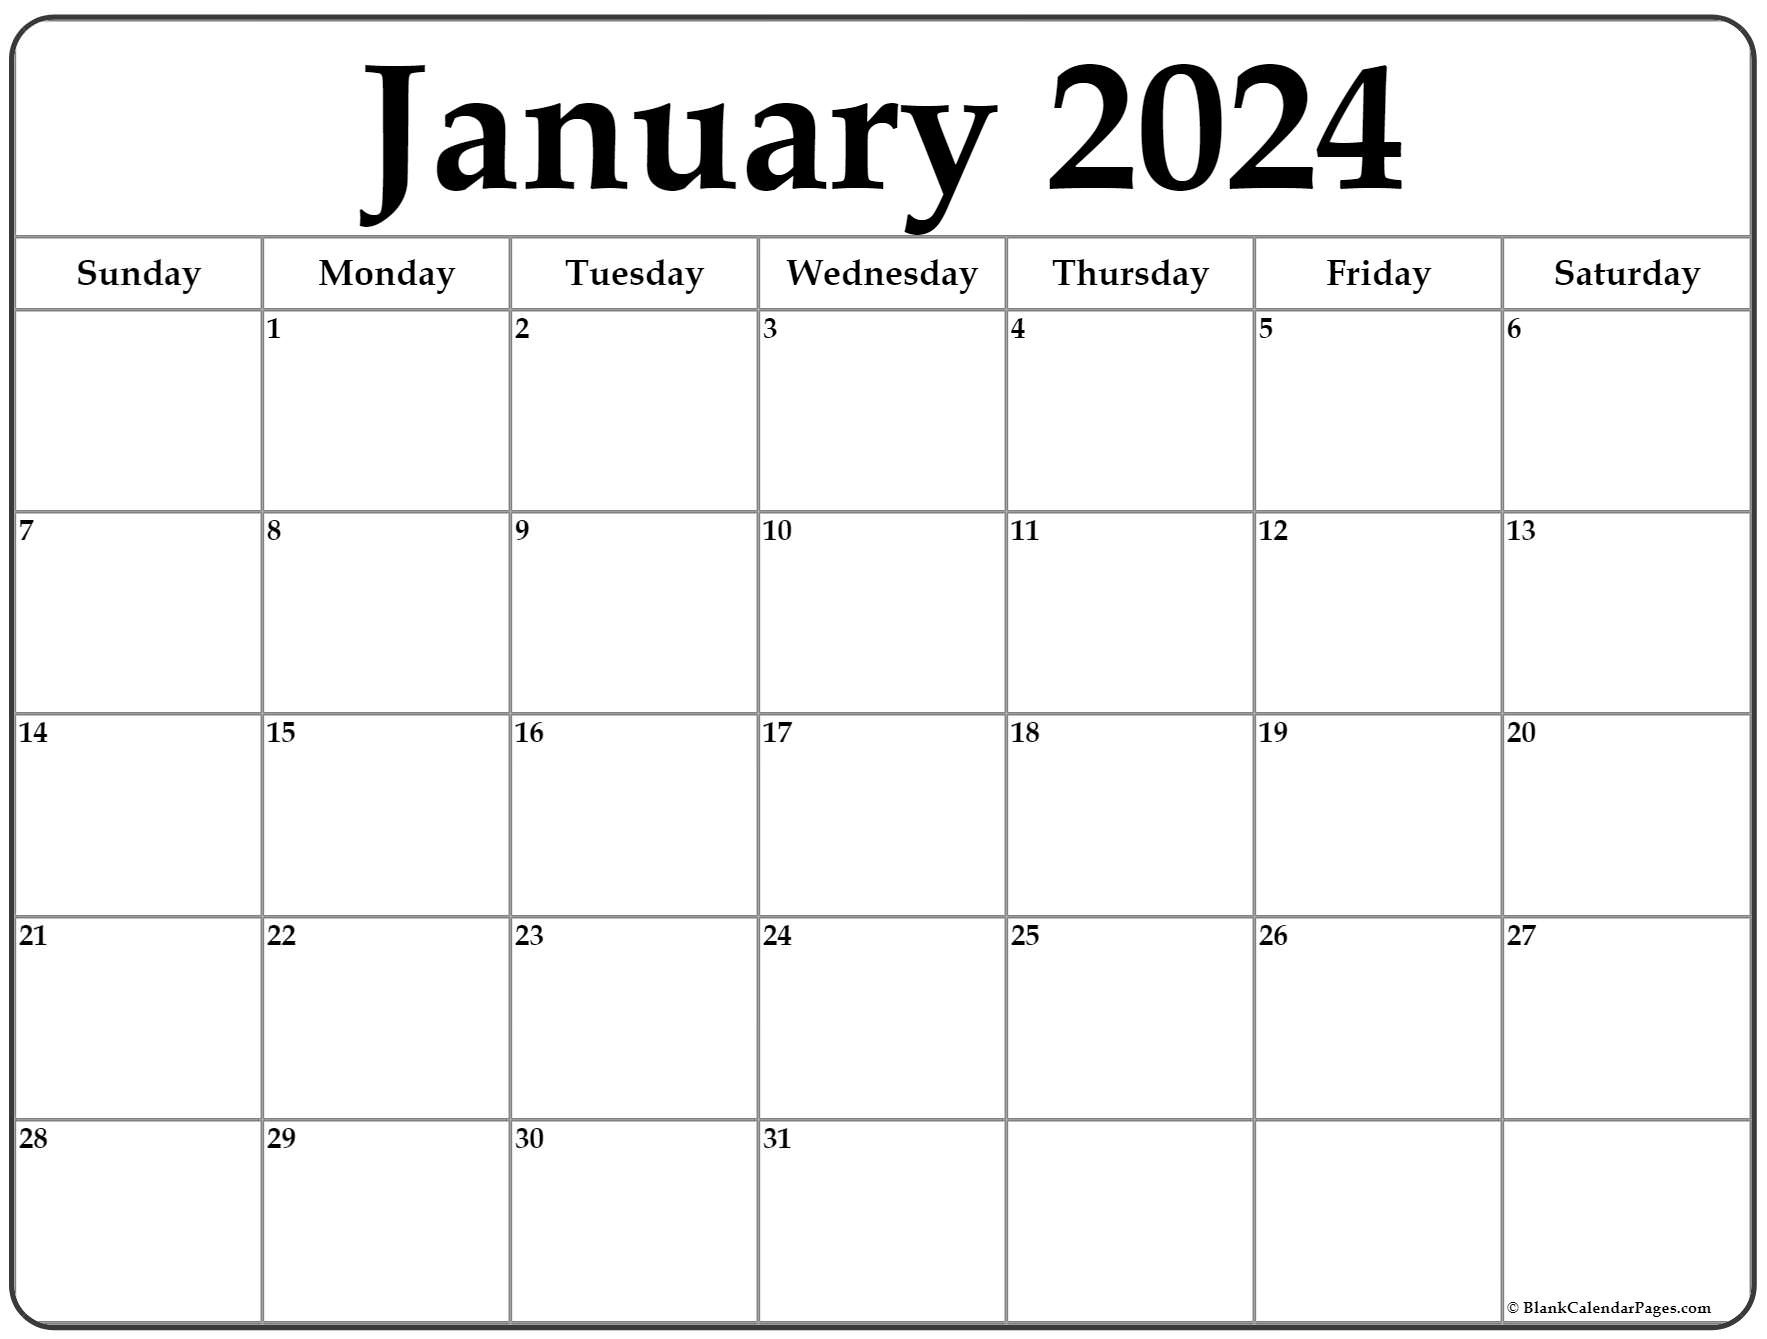 January 2024 Calendar | Free Printable Calendar intended for Free Printable Calendar 2024 No Downloads